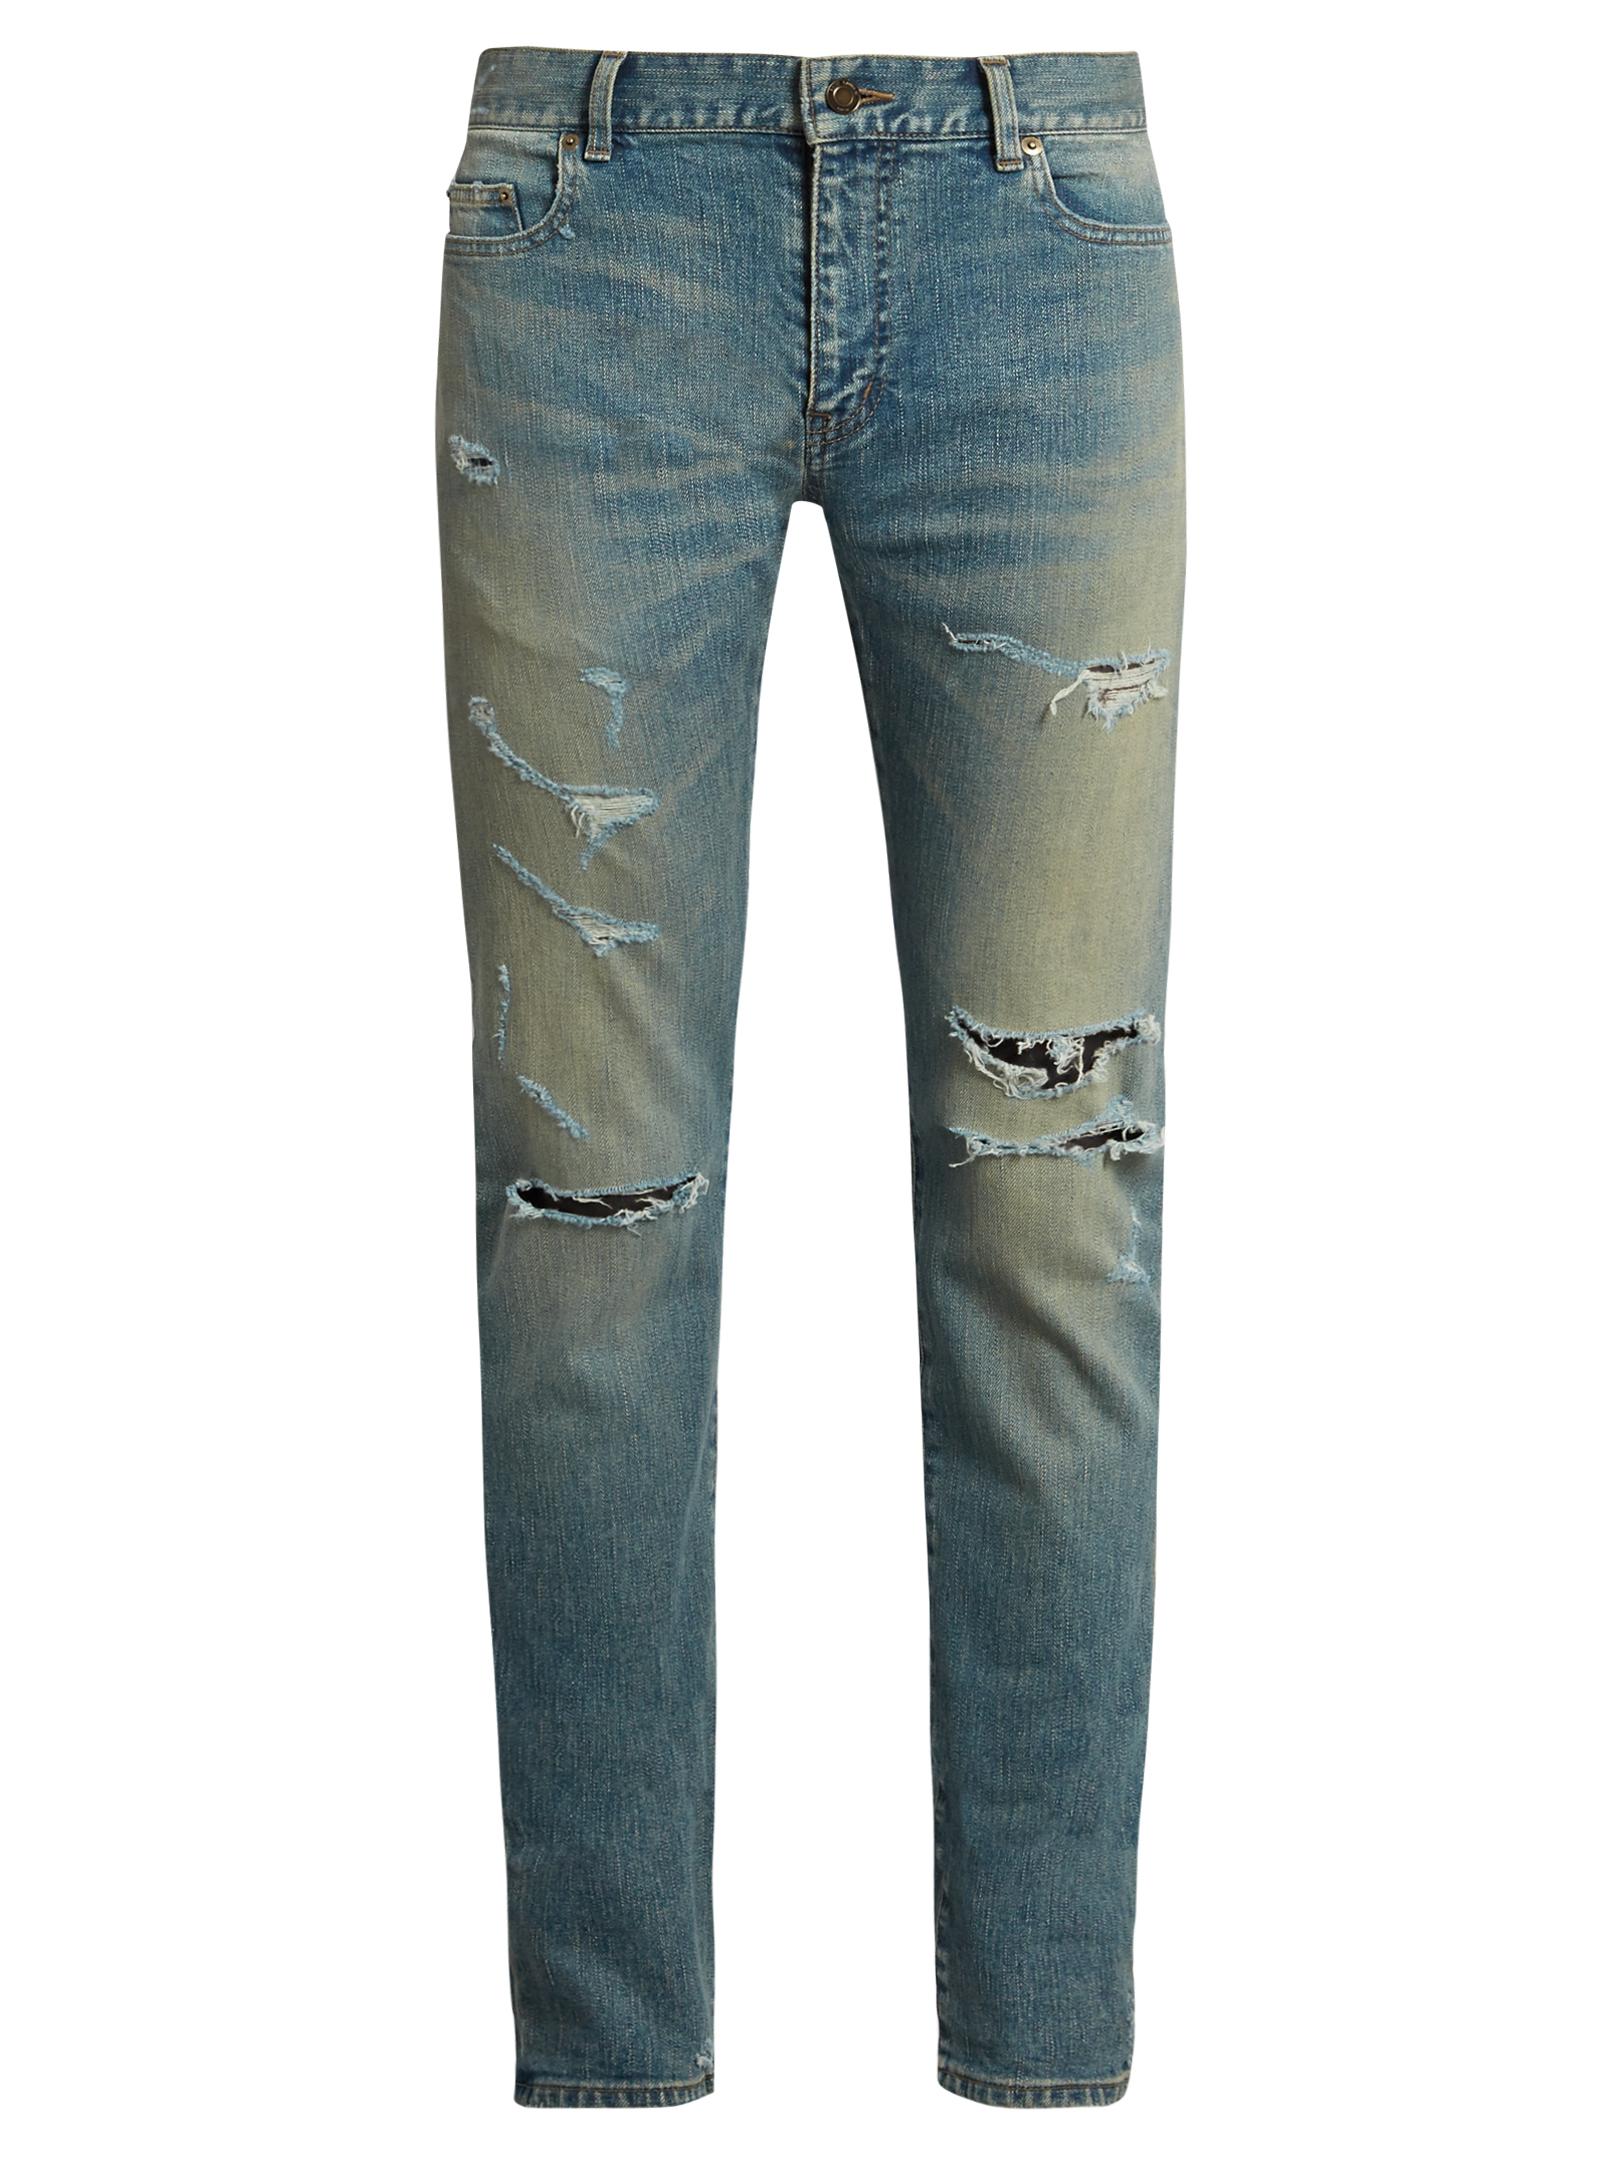 Saint Laurent Denim Distressed Skinny Jeans in Denim (Blue) for Men - Lyst